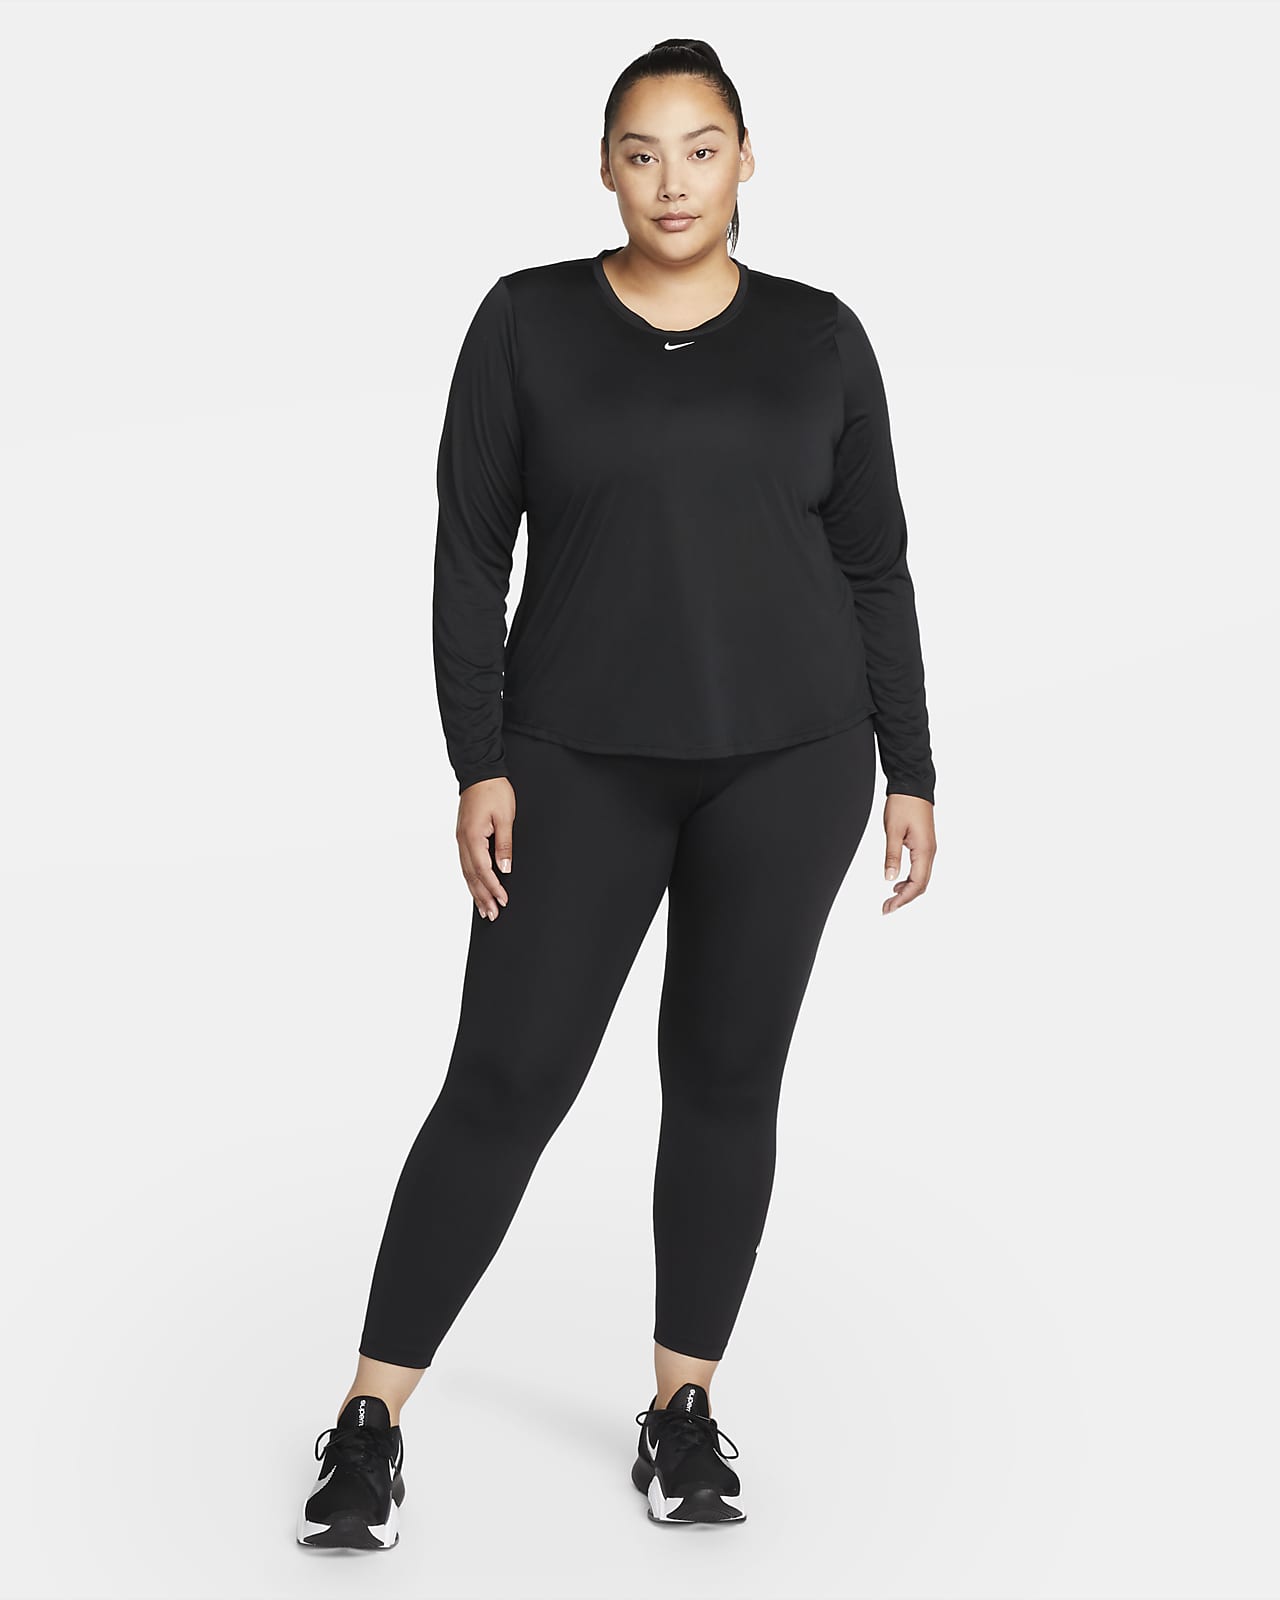 Nike Women's One Tights Plus (Black/White, Size 2X), Women's